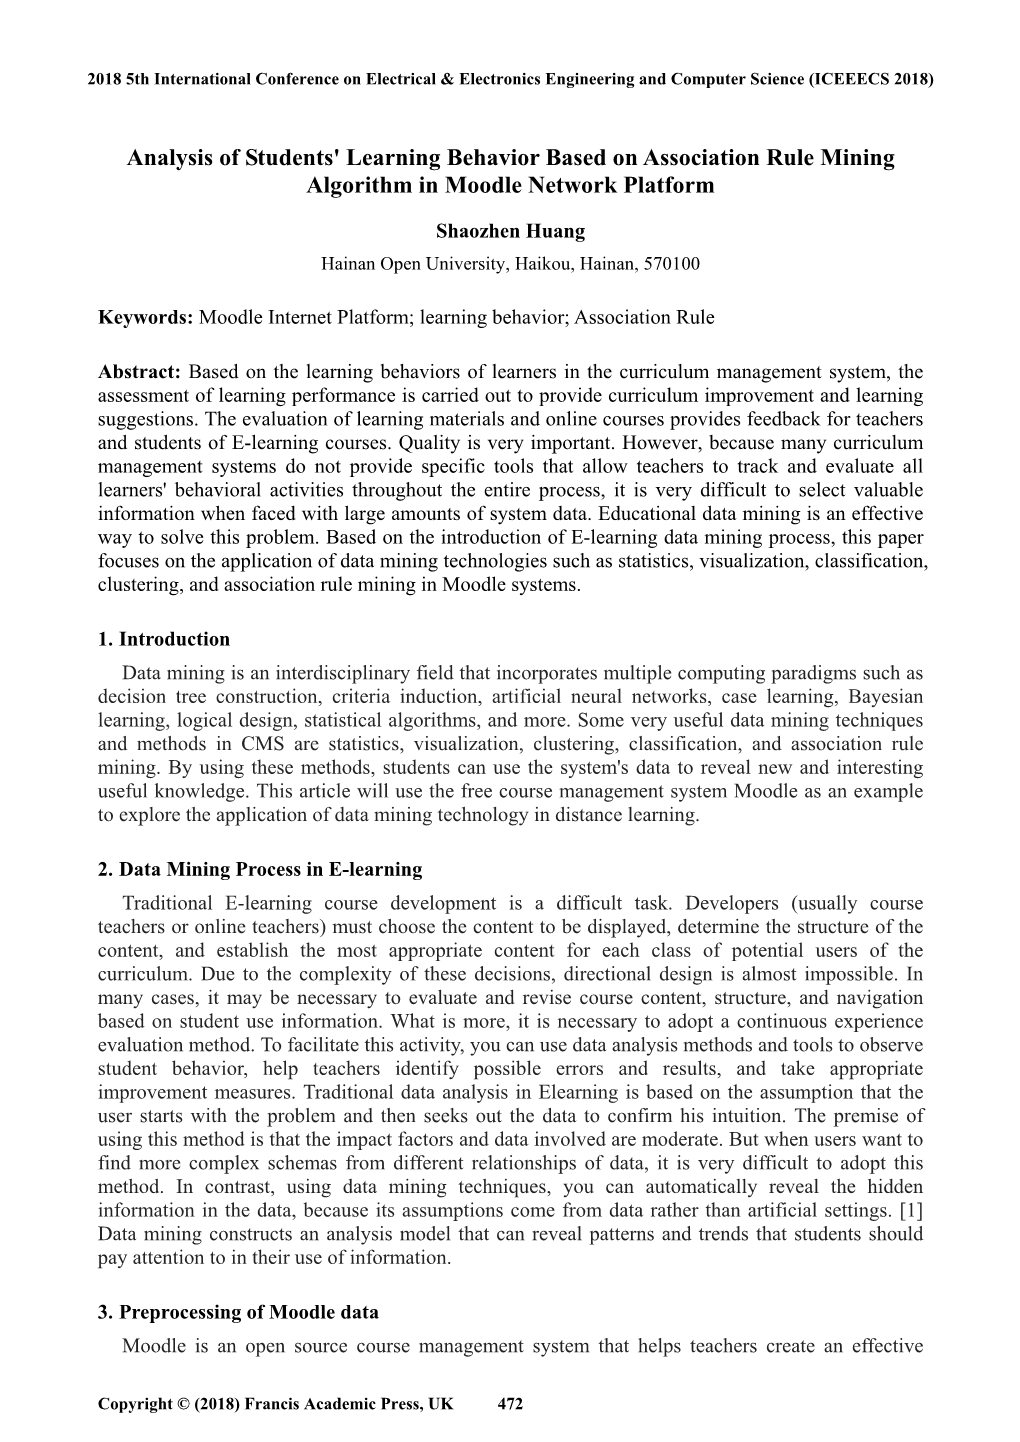 Analysis of Students' Learning Behavior Based on Association Rule Mining Algorithm in Moodle Network Platform